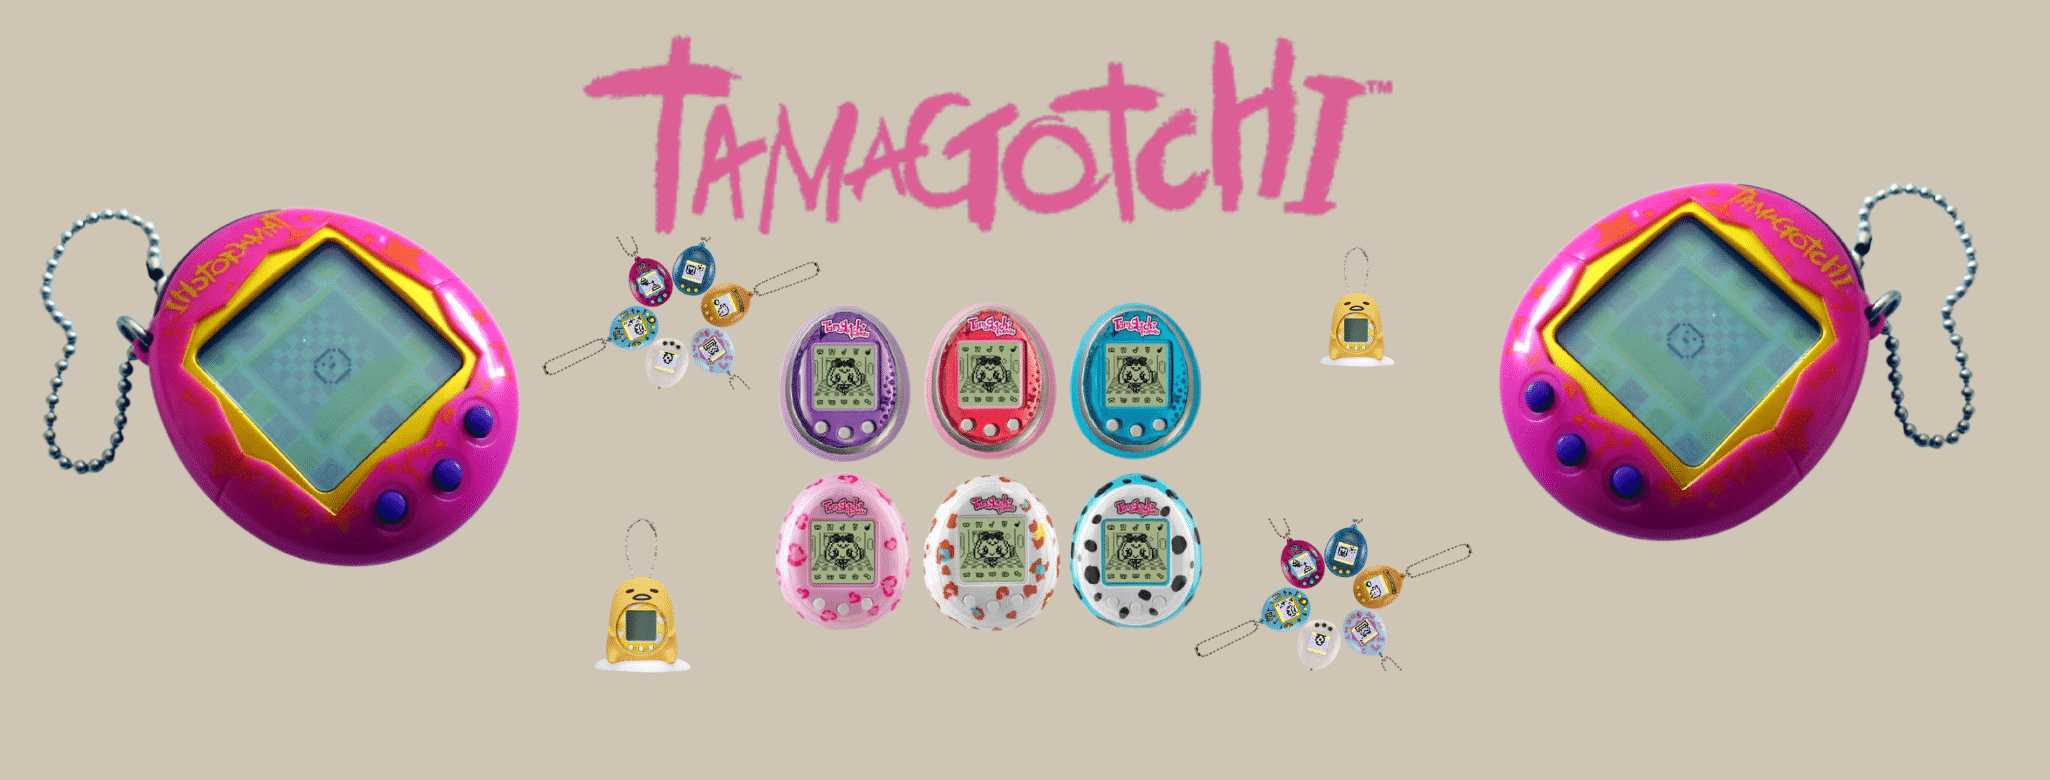 Tamagotchi original: le premier animal de compagnie virtuel